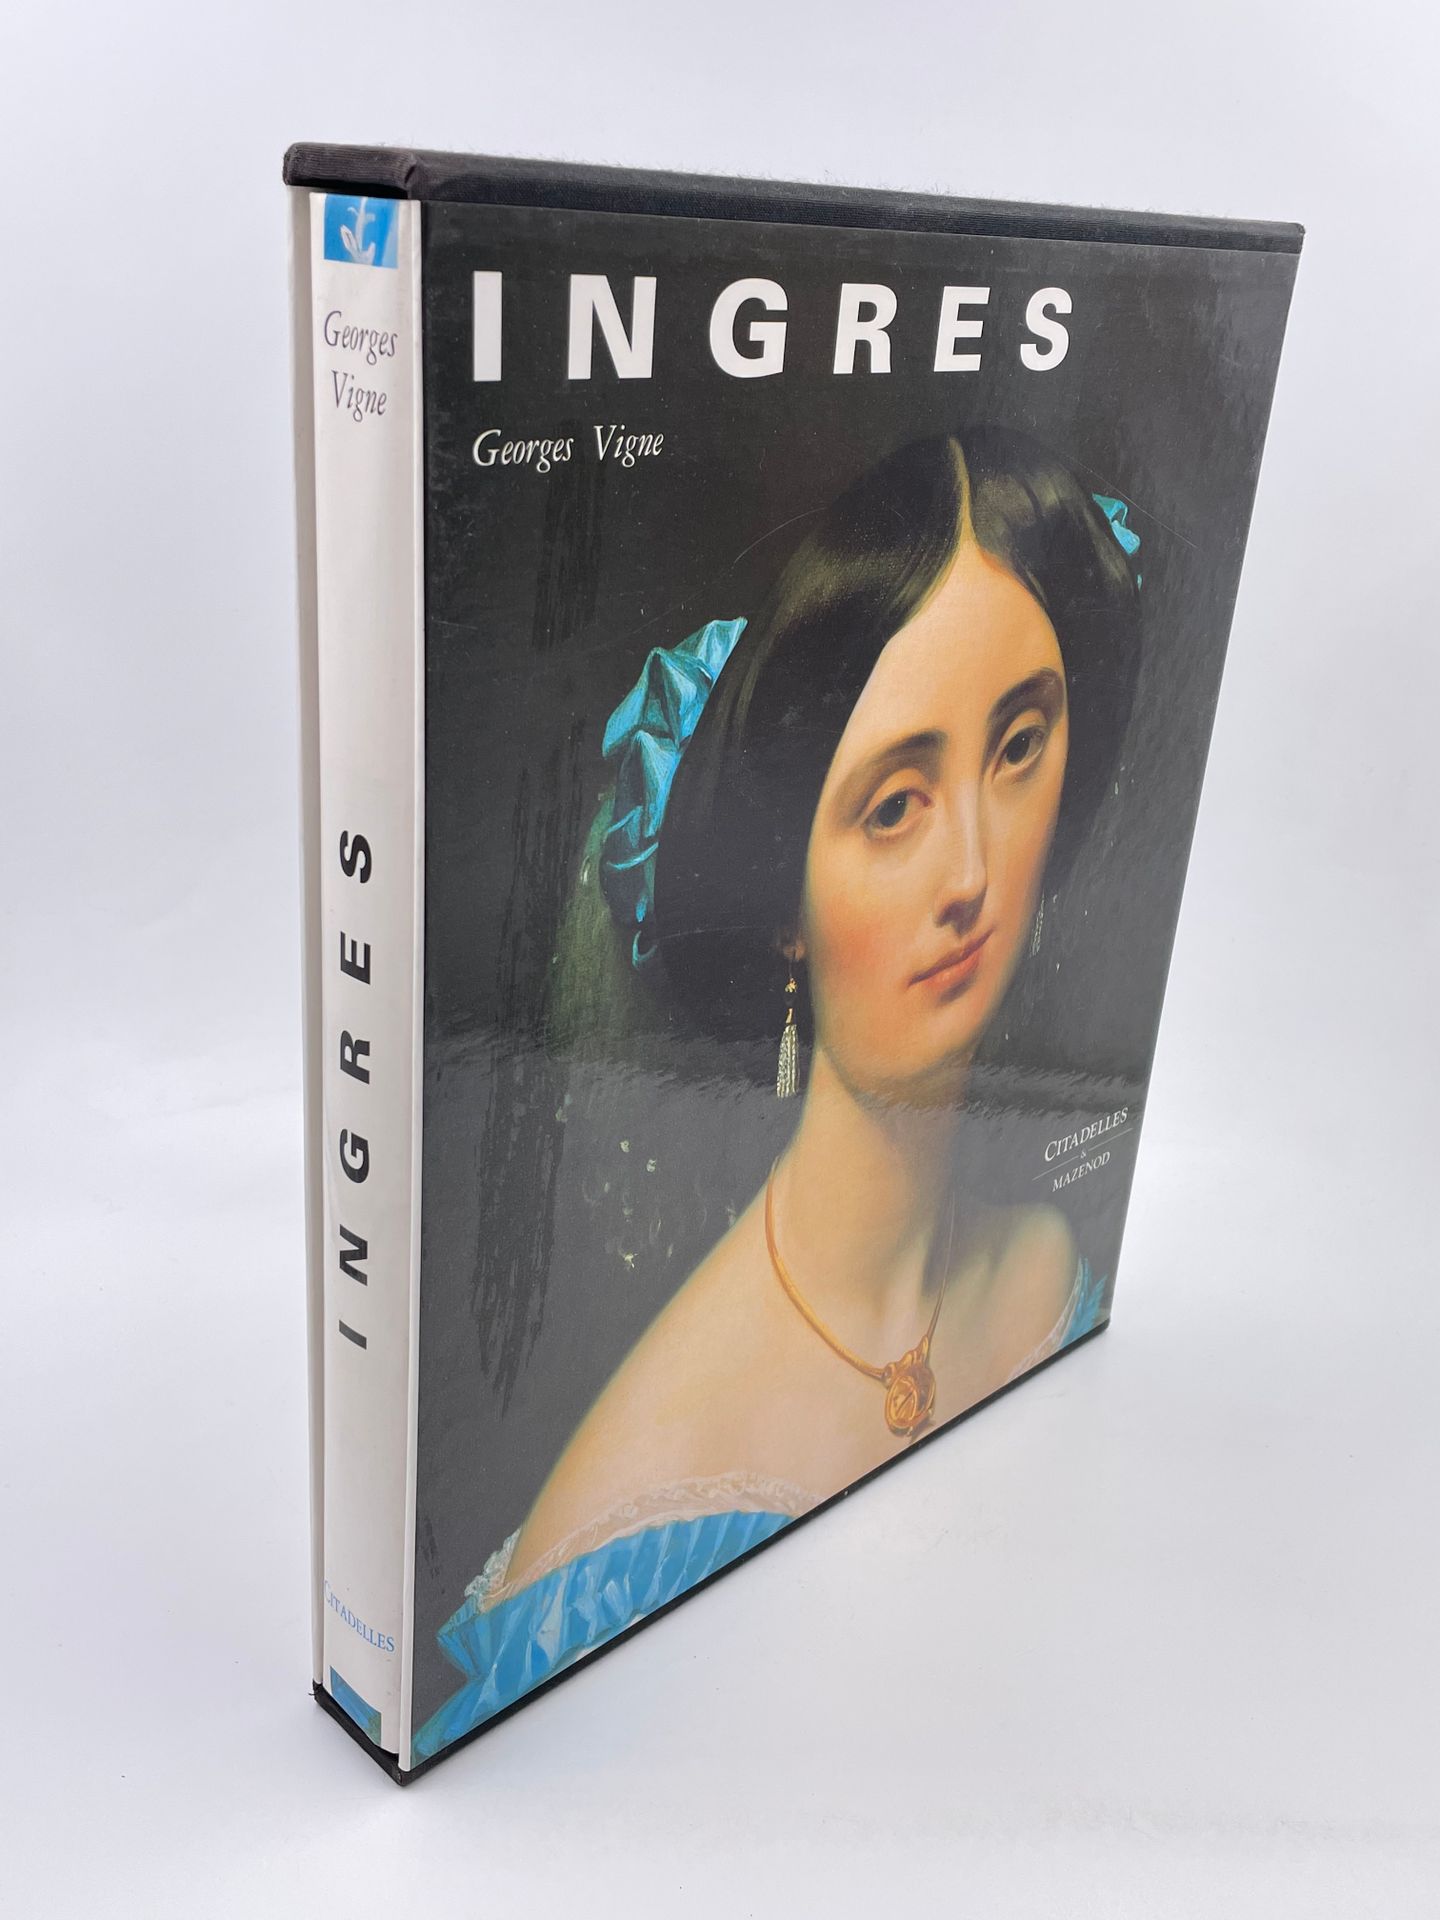 Null 1 Volume : "Ingres", Georges Vigne, Ed. Citadelles & Mazenod, 1995, Livre s&hellip;